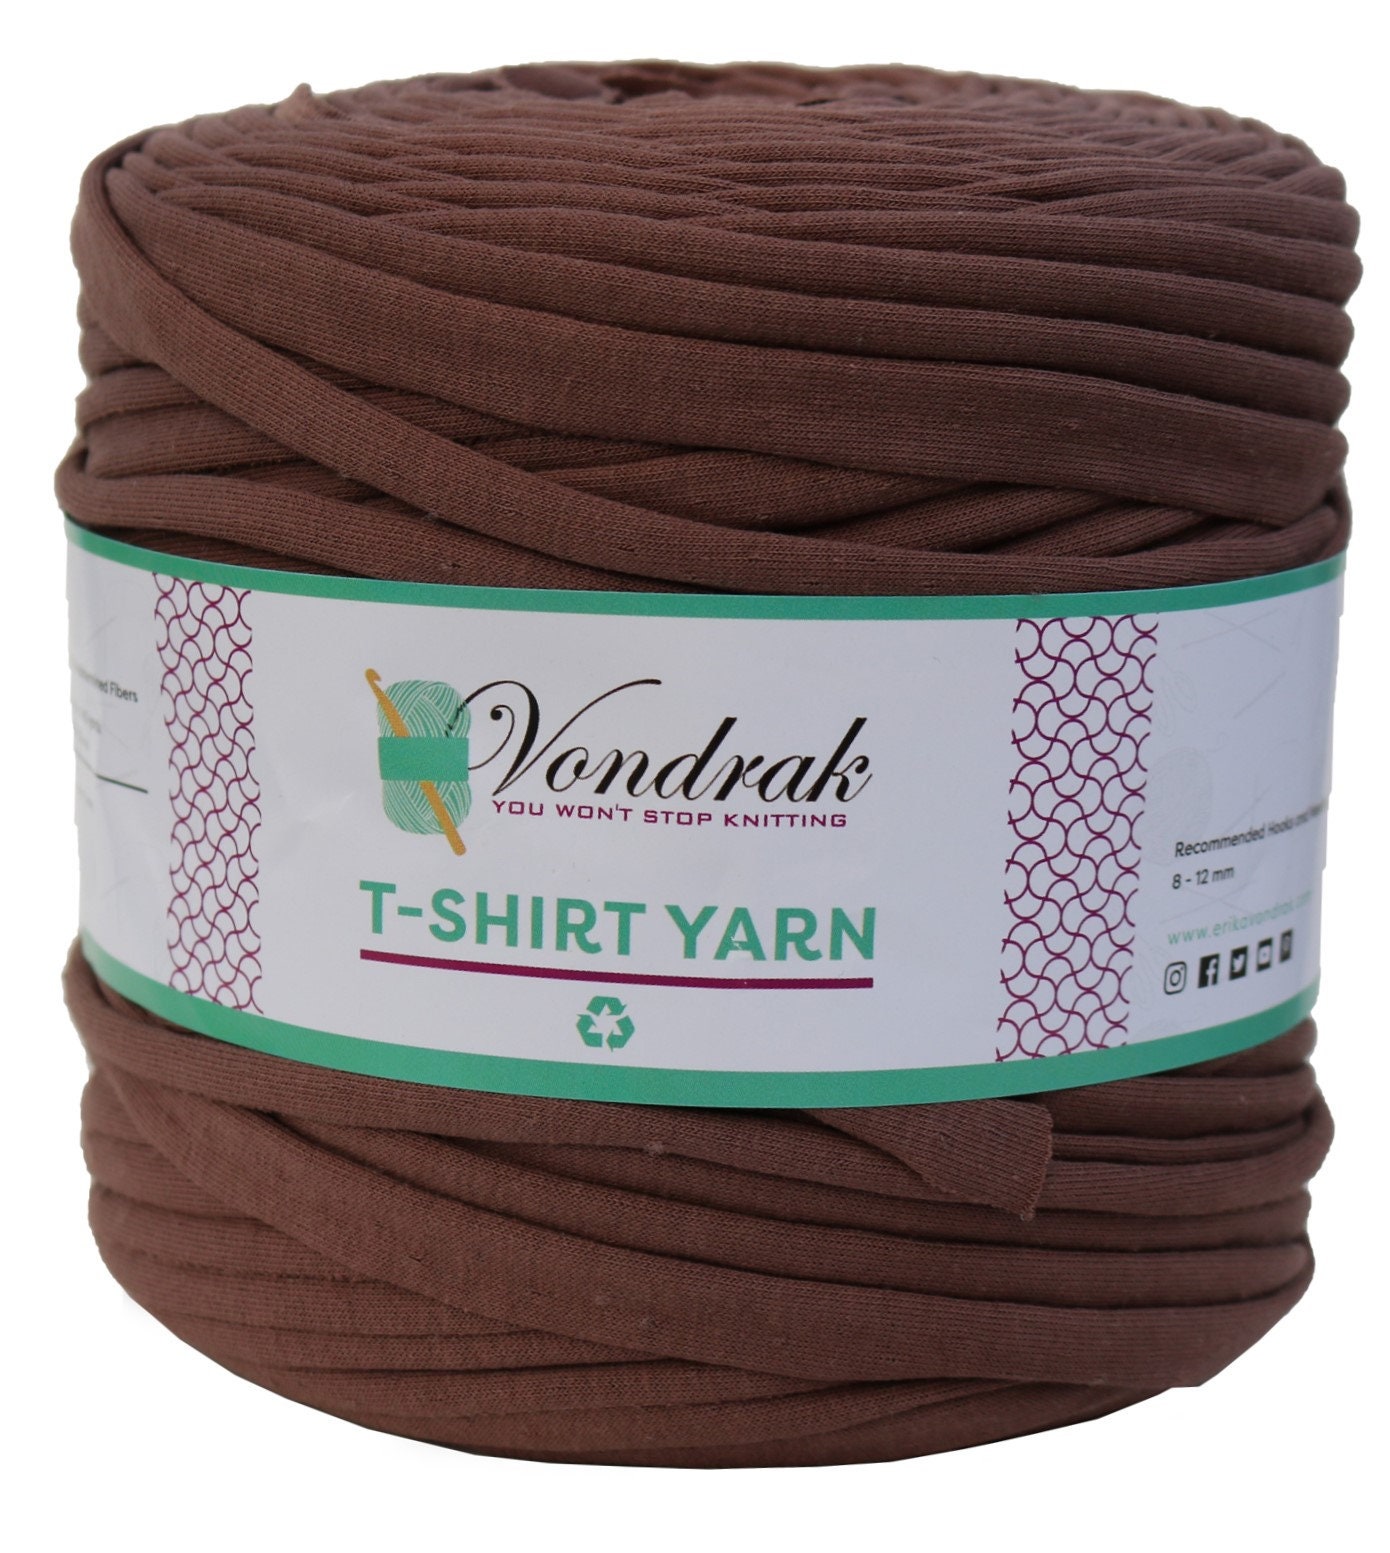 T Shirt Yarn Wholesale Recycled Yarn from - Mariehone